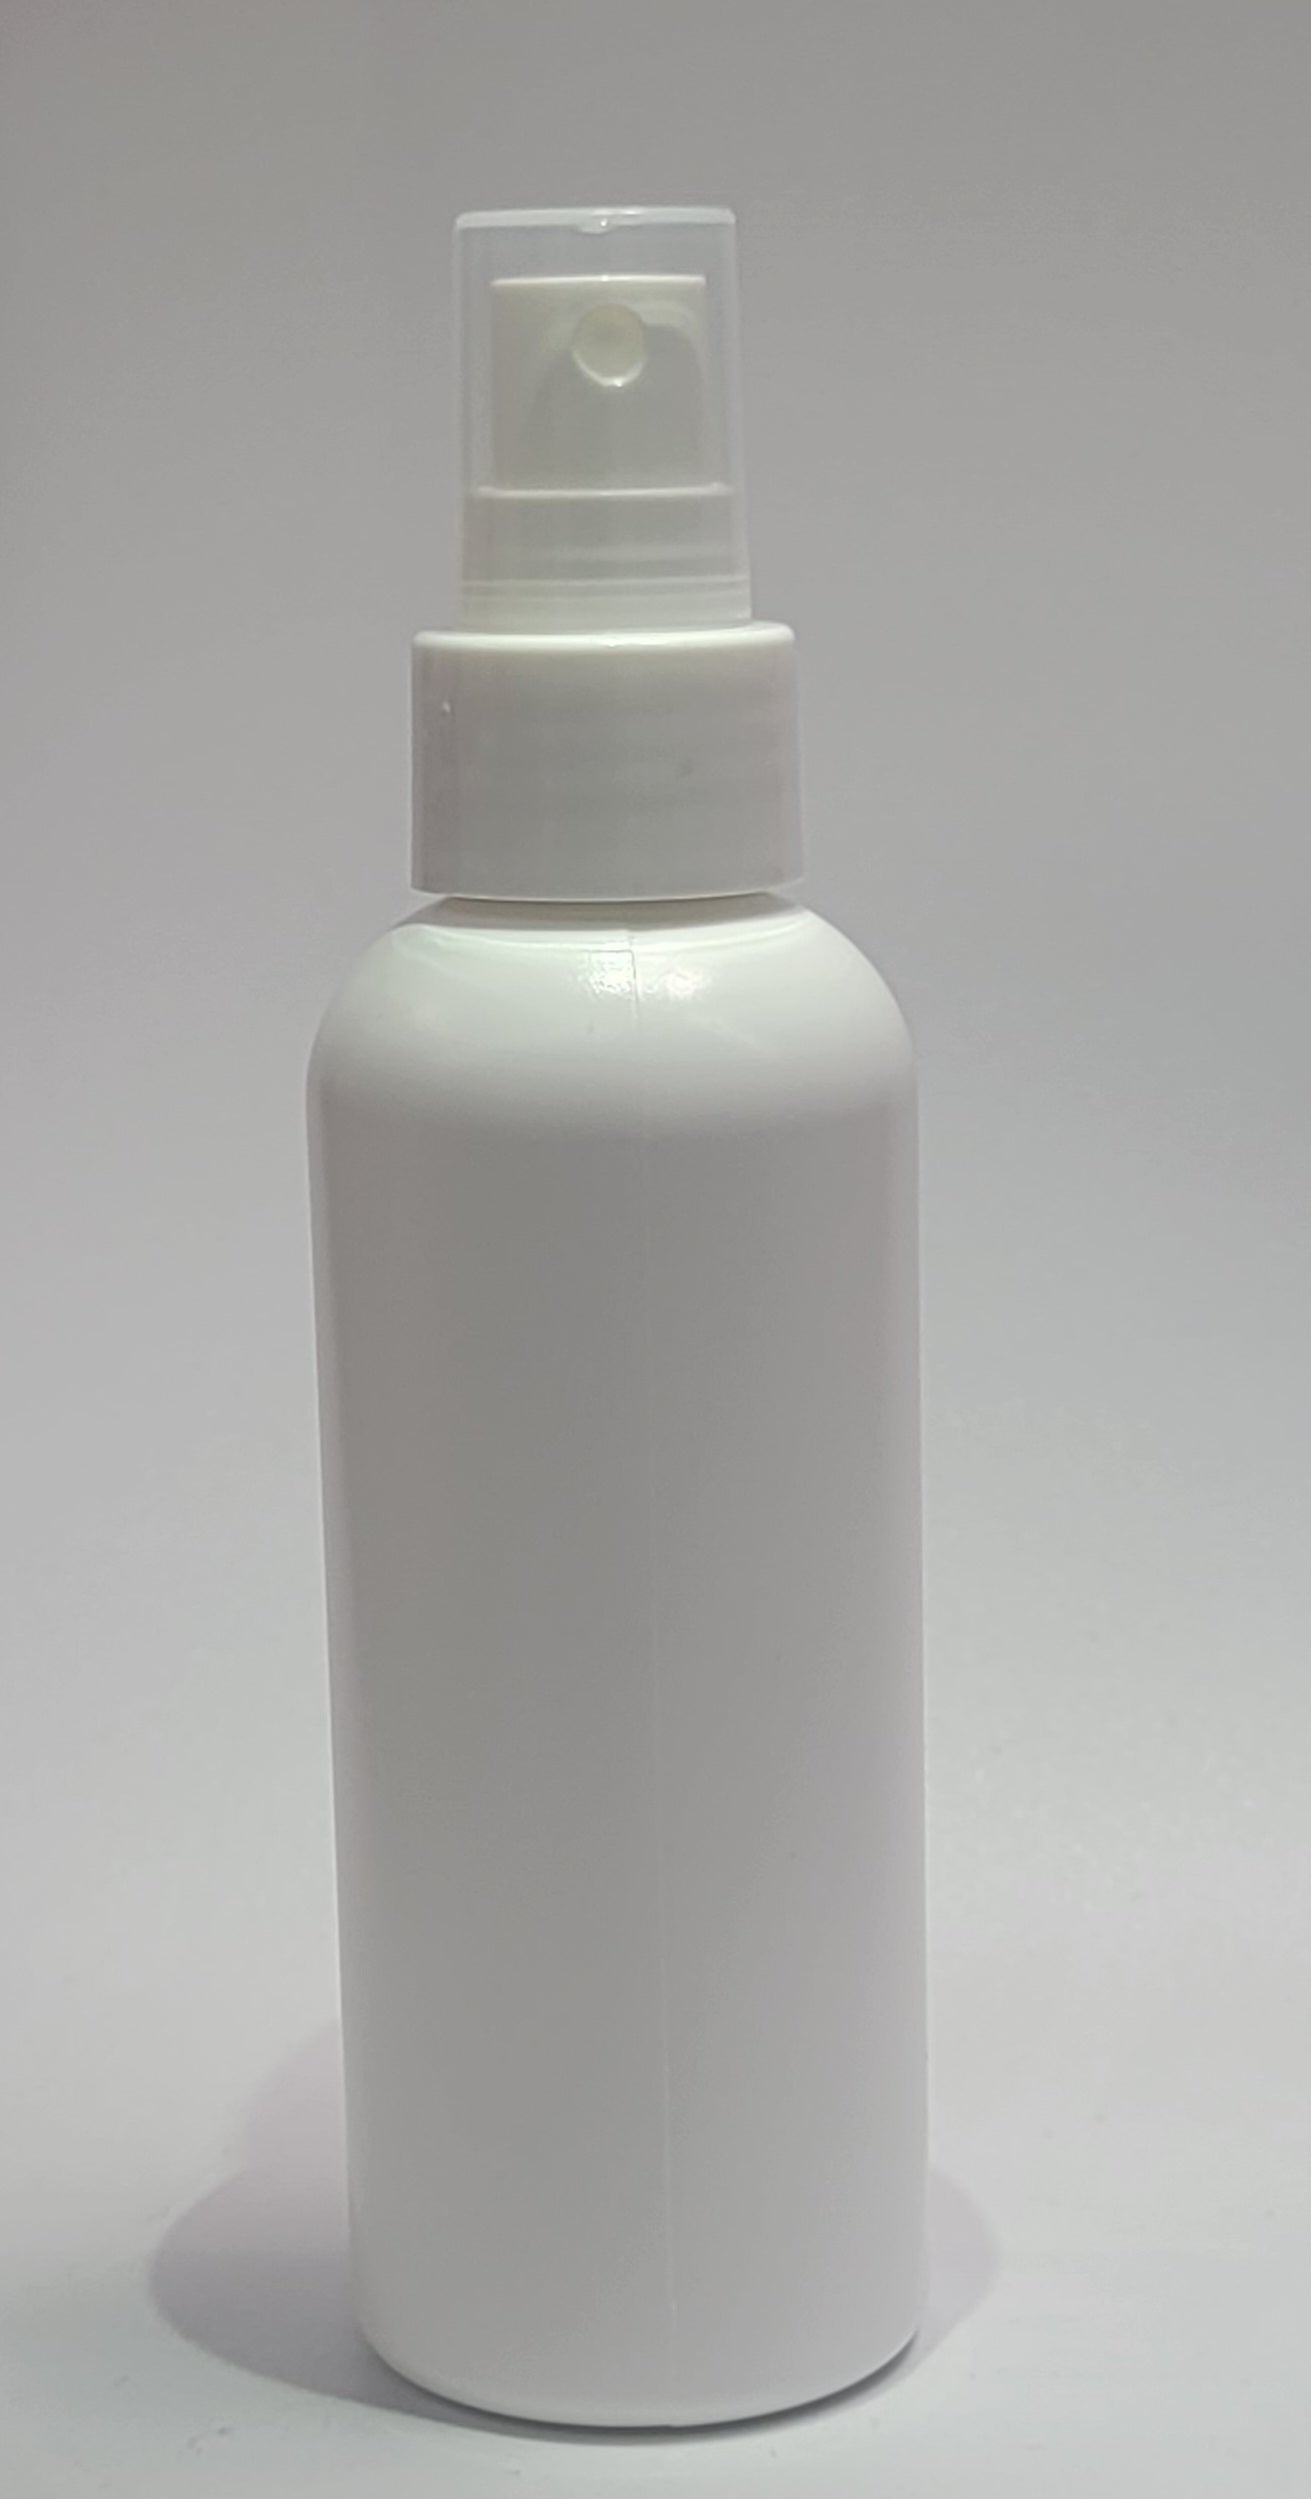 4oz Linen/Room Spray Bottle with Sprayer